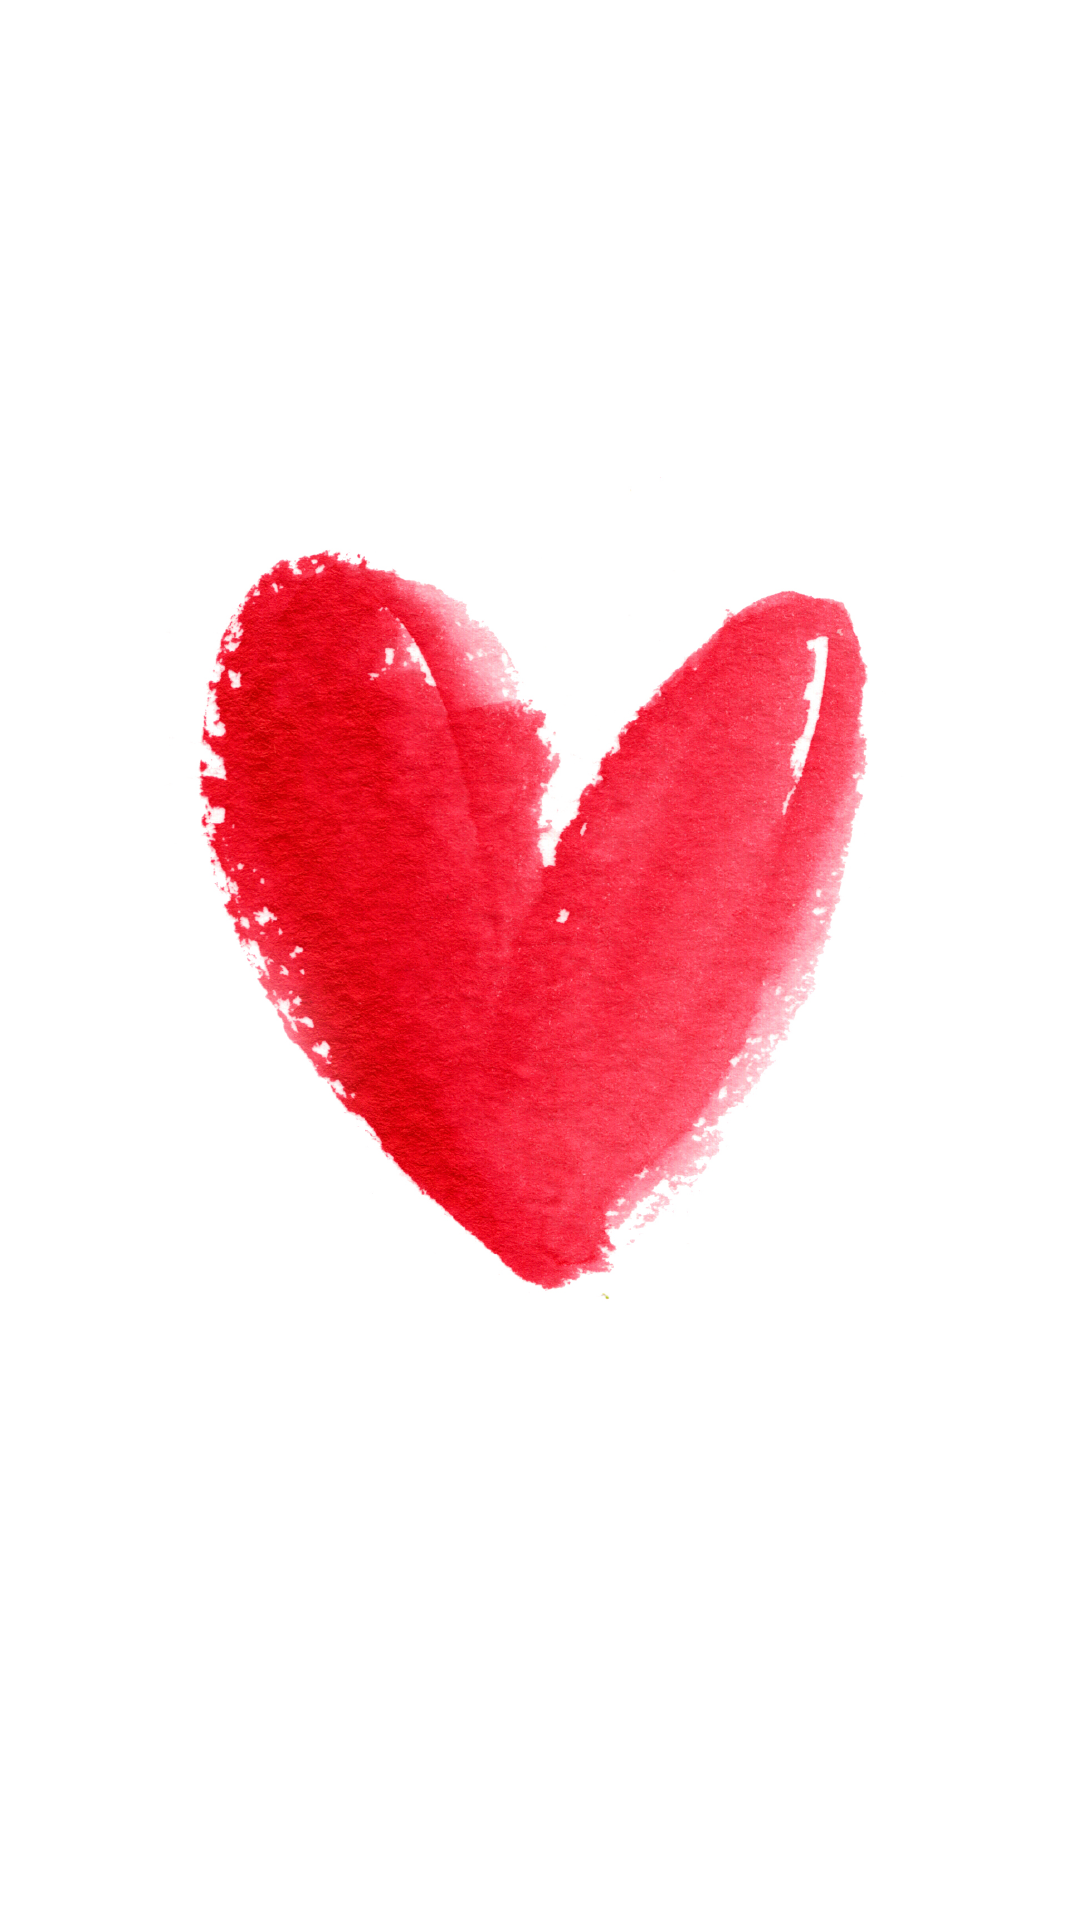 February Iphone Nicolesclasses - Red Watercolour Heart - 1080x1921 Wallpaper  